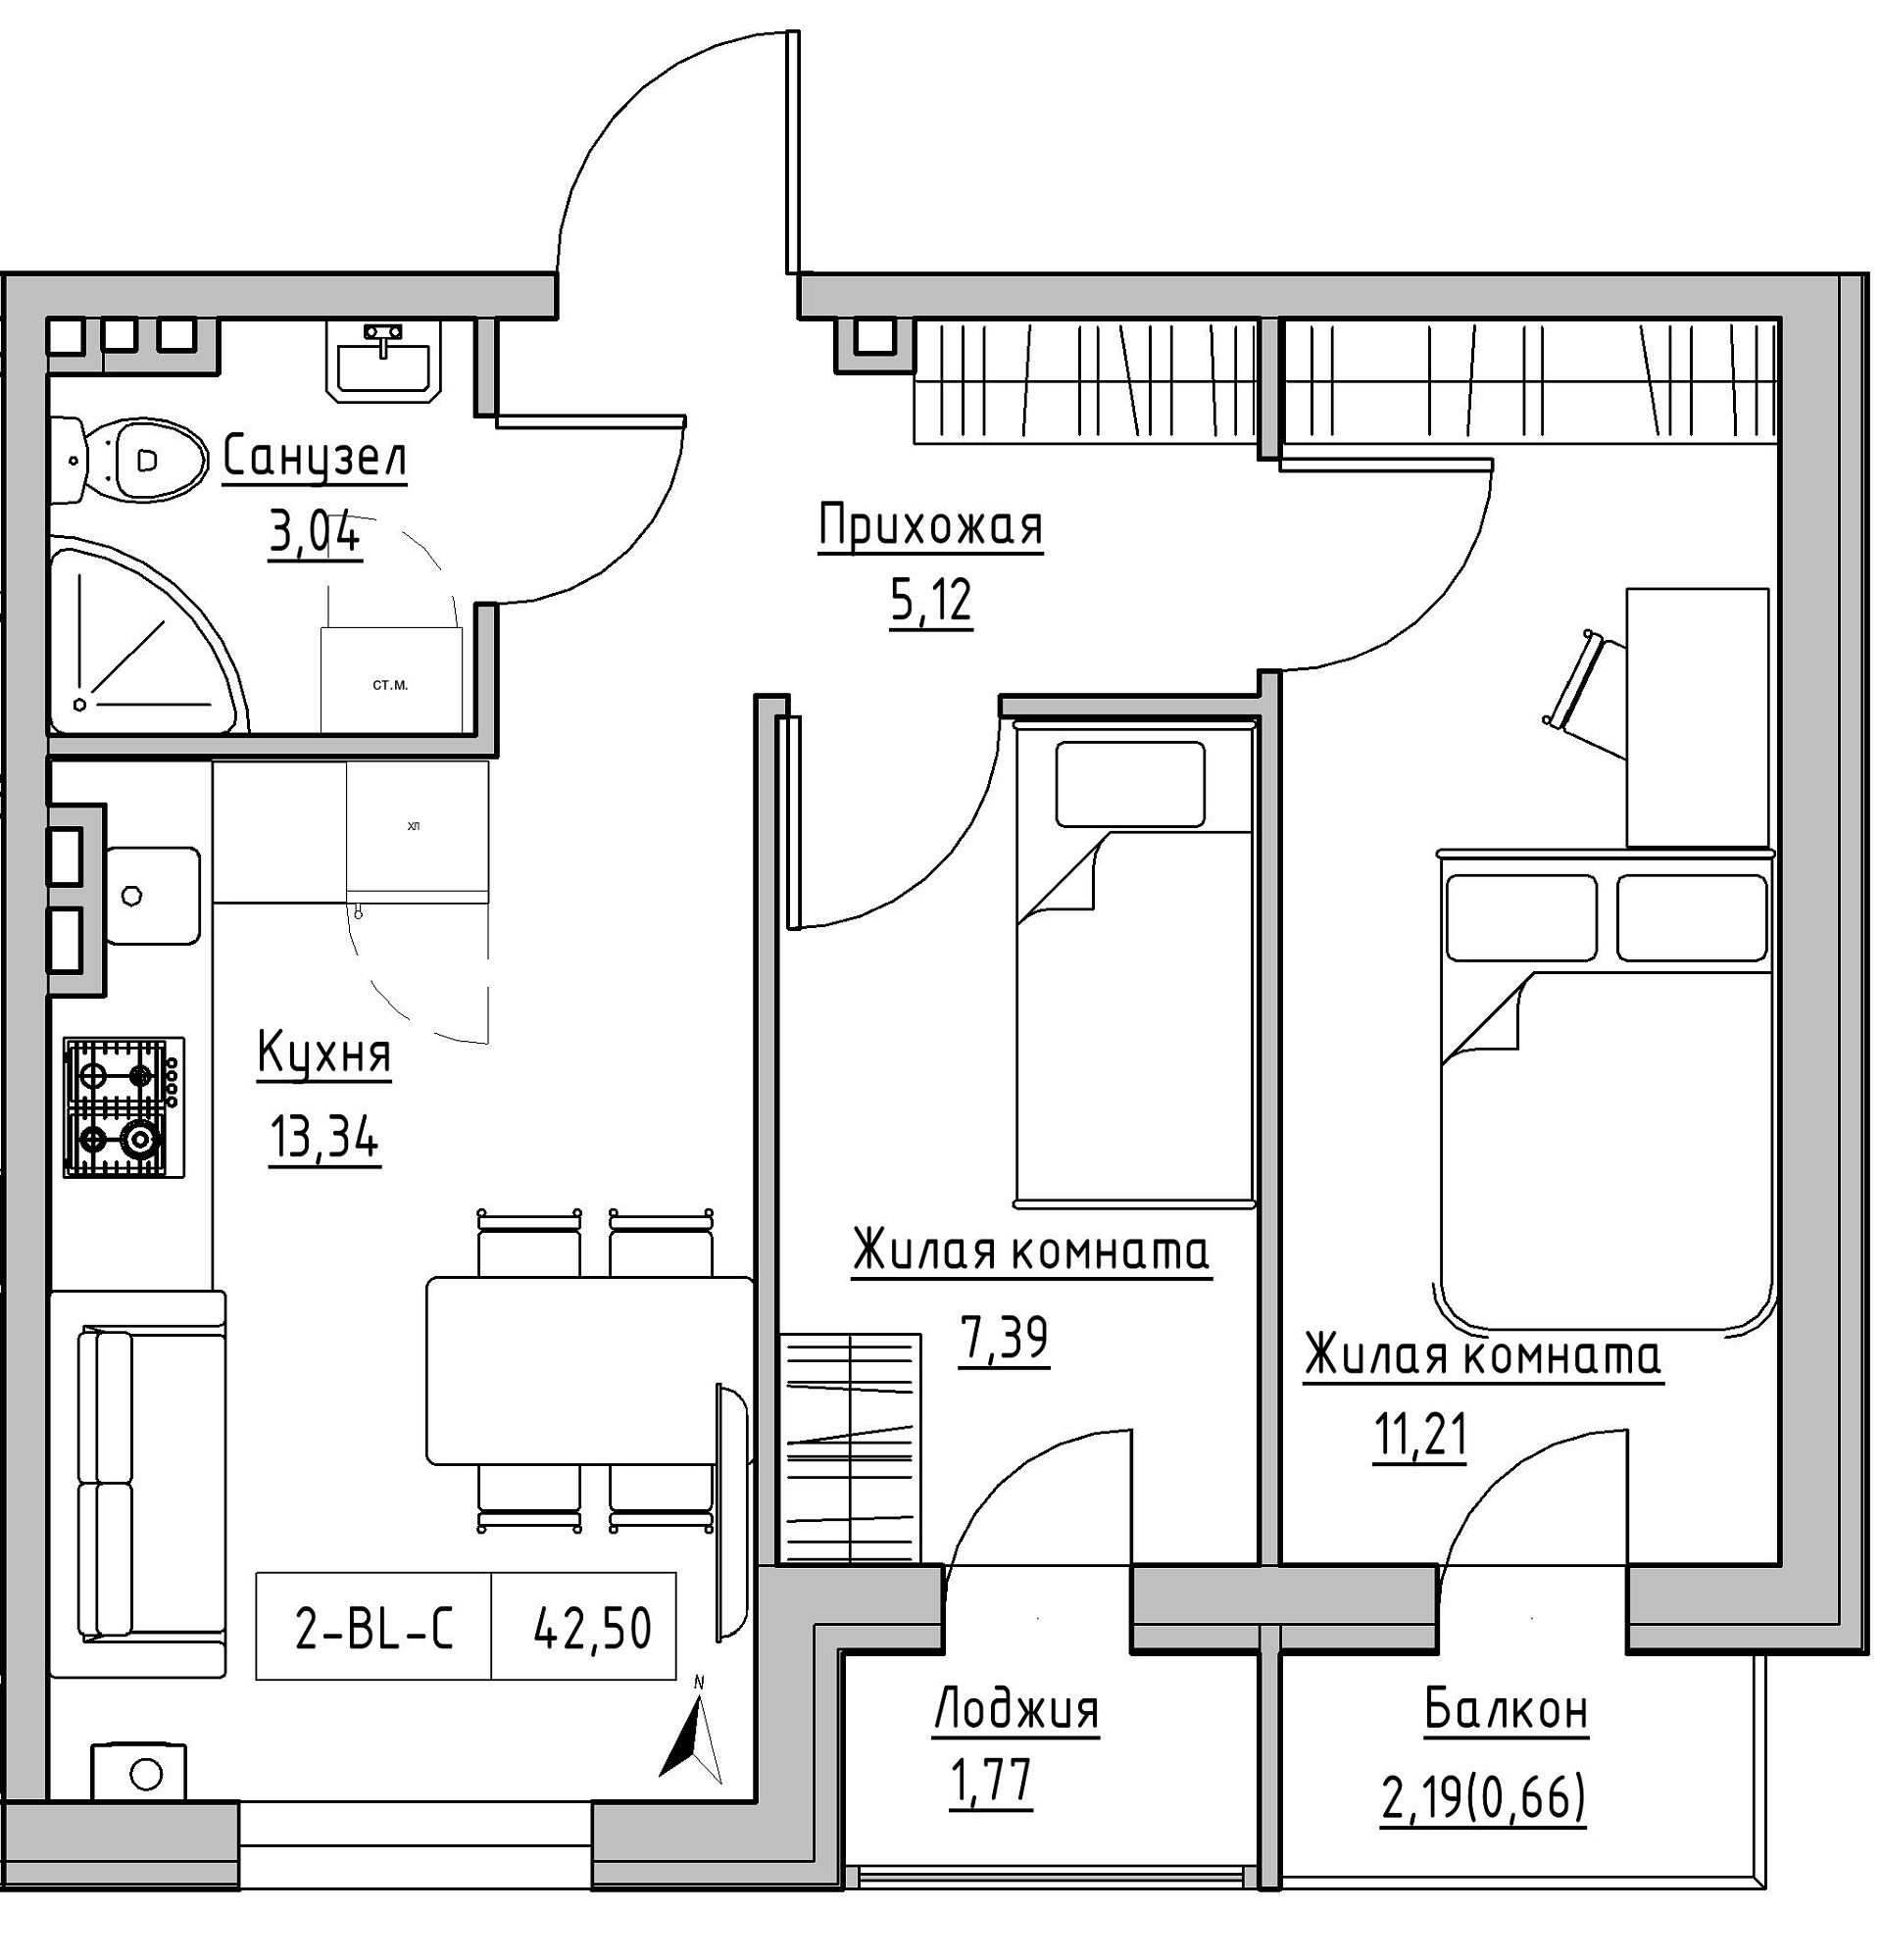 Planning 2-rm flats area 42.5m2, KS-024-02/0005.